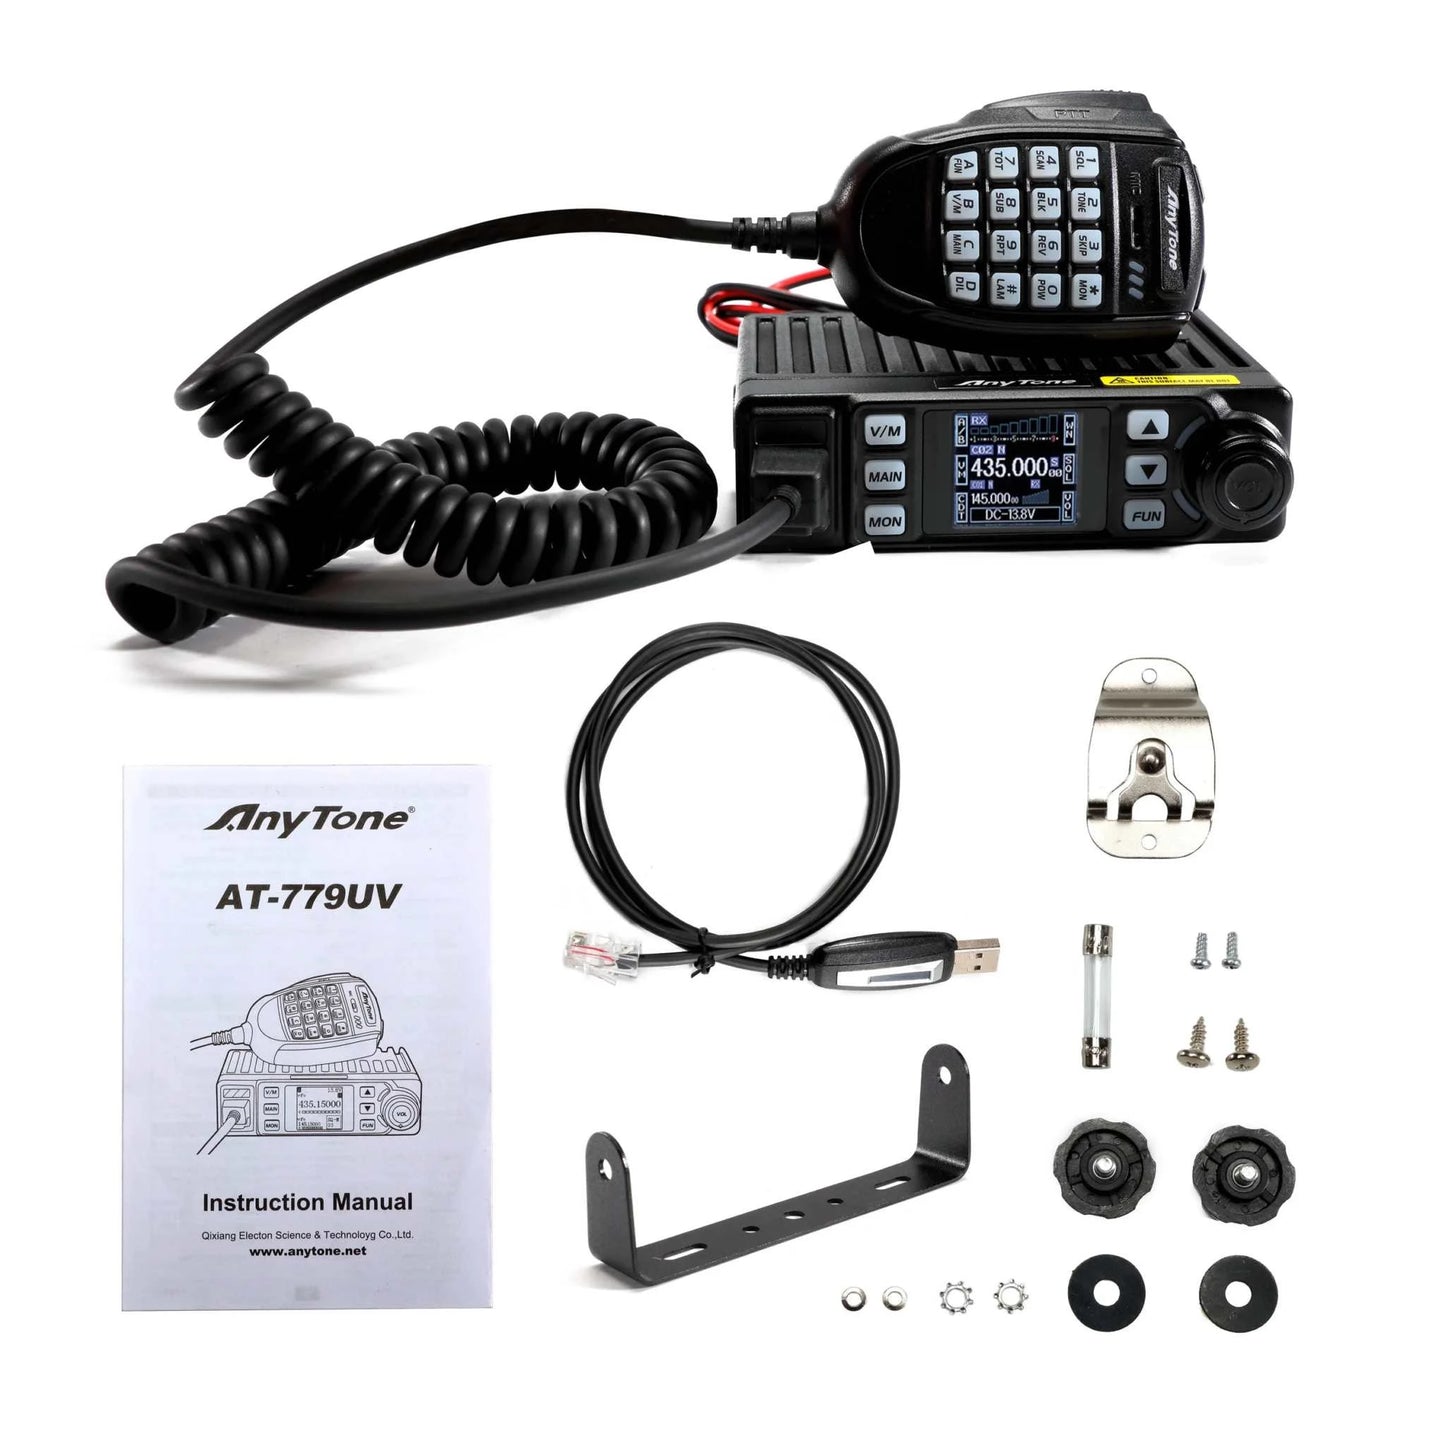 AnyTone AT-779UV Walkie Talkie VHF 136-174MHz UHF 400-480MHz Mini Mobile Radio Station Dual Band Transceiver Amateur Radio